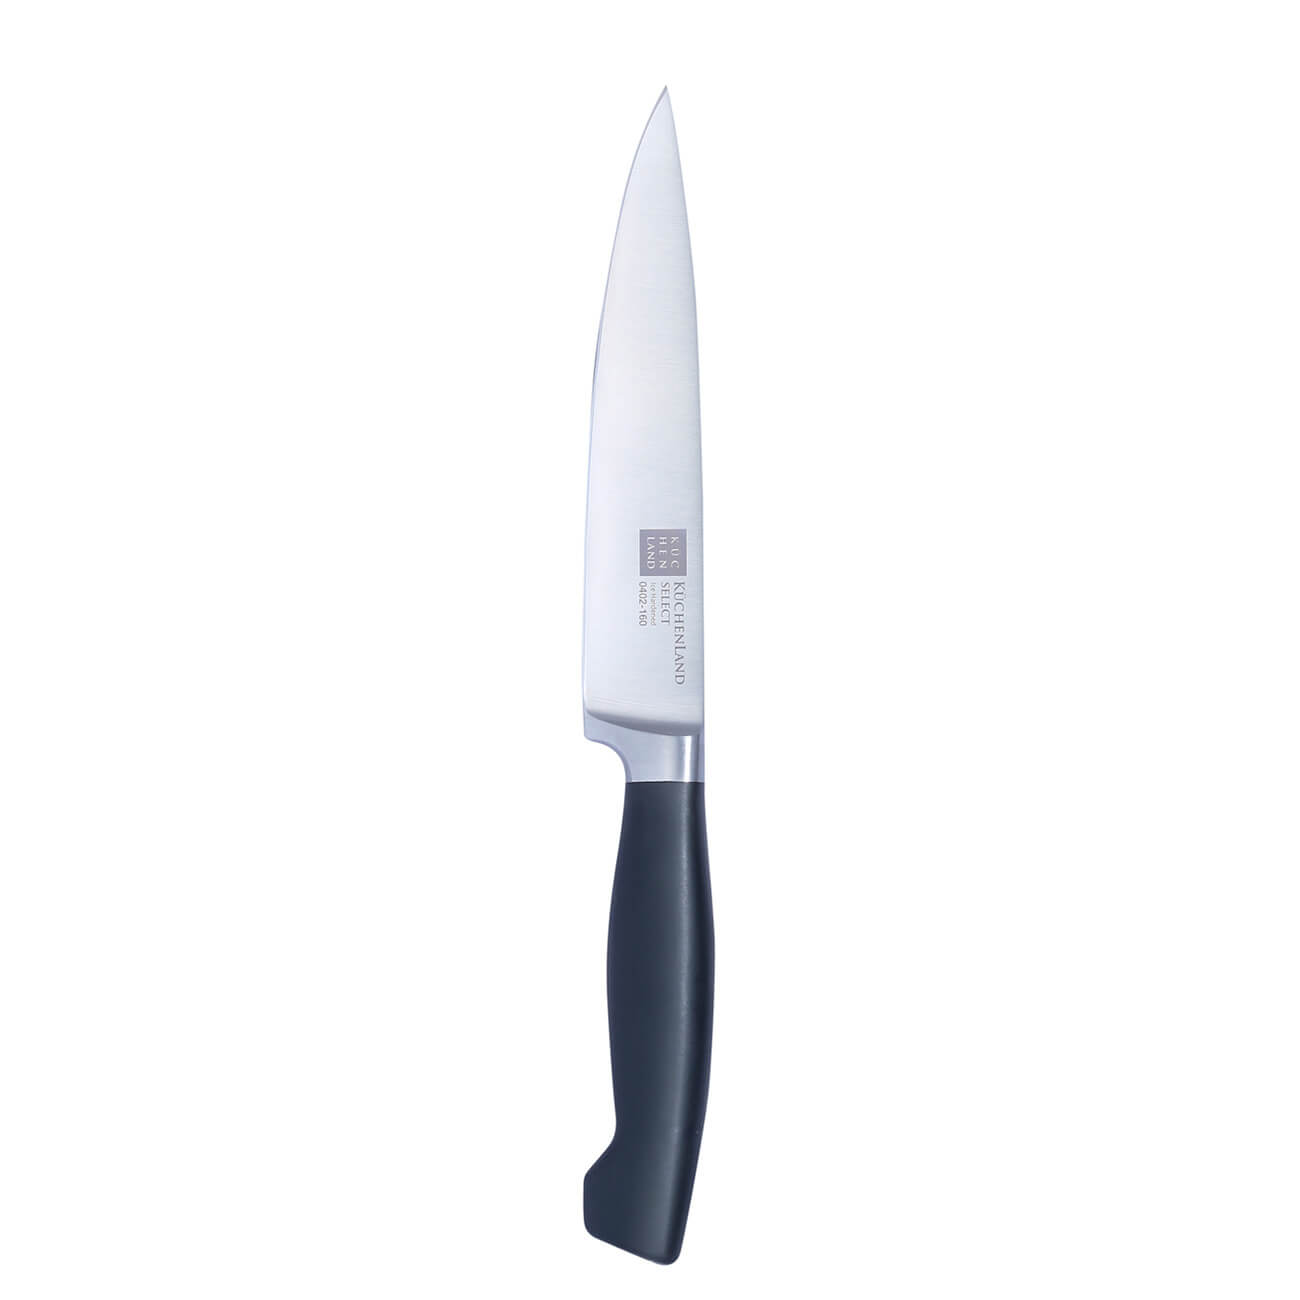 Kuchenland Нож для нарезки, 16 см, сталь/пластик, Select кефирный продукт bio баланс 0% бзмж 930 гр